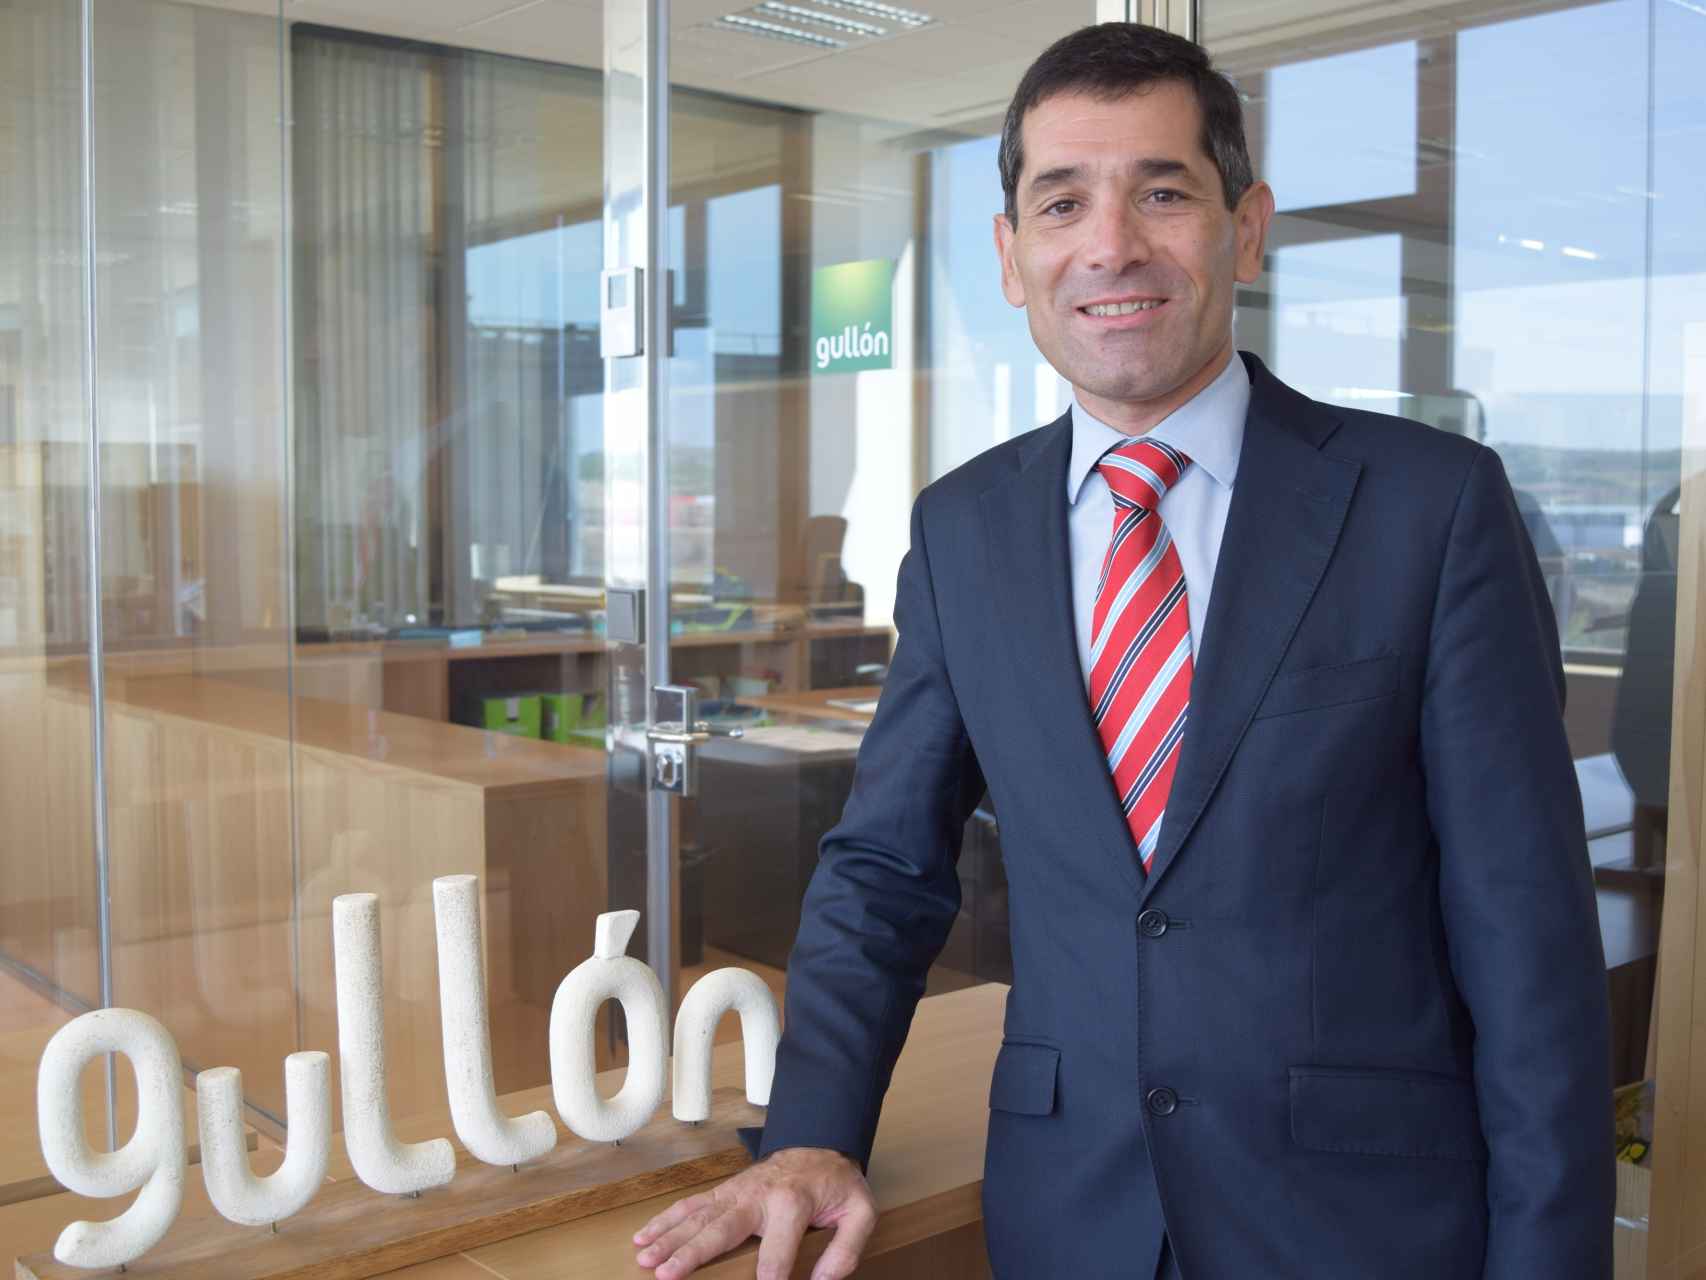 Paco Hevia, director corporativo de Gullón, acude como ponente a la presentación de CYL-HUB